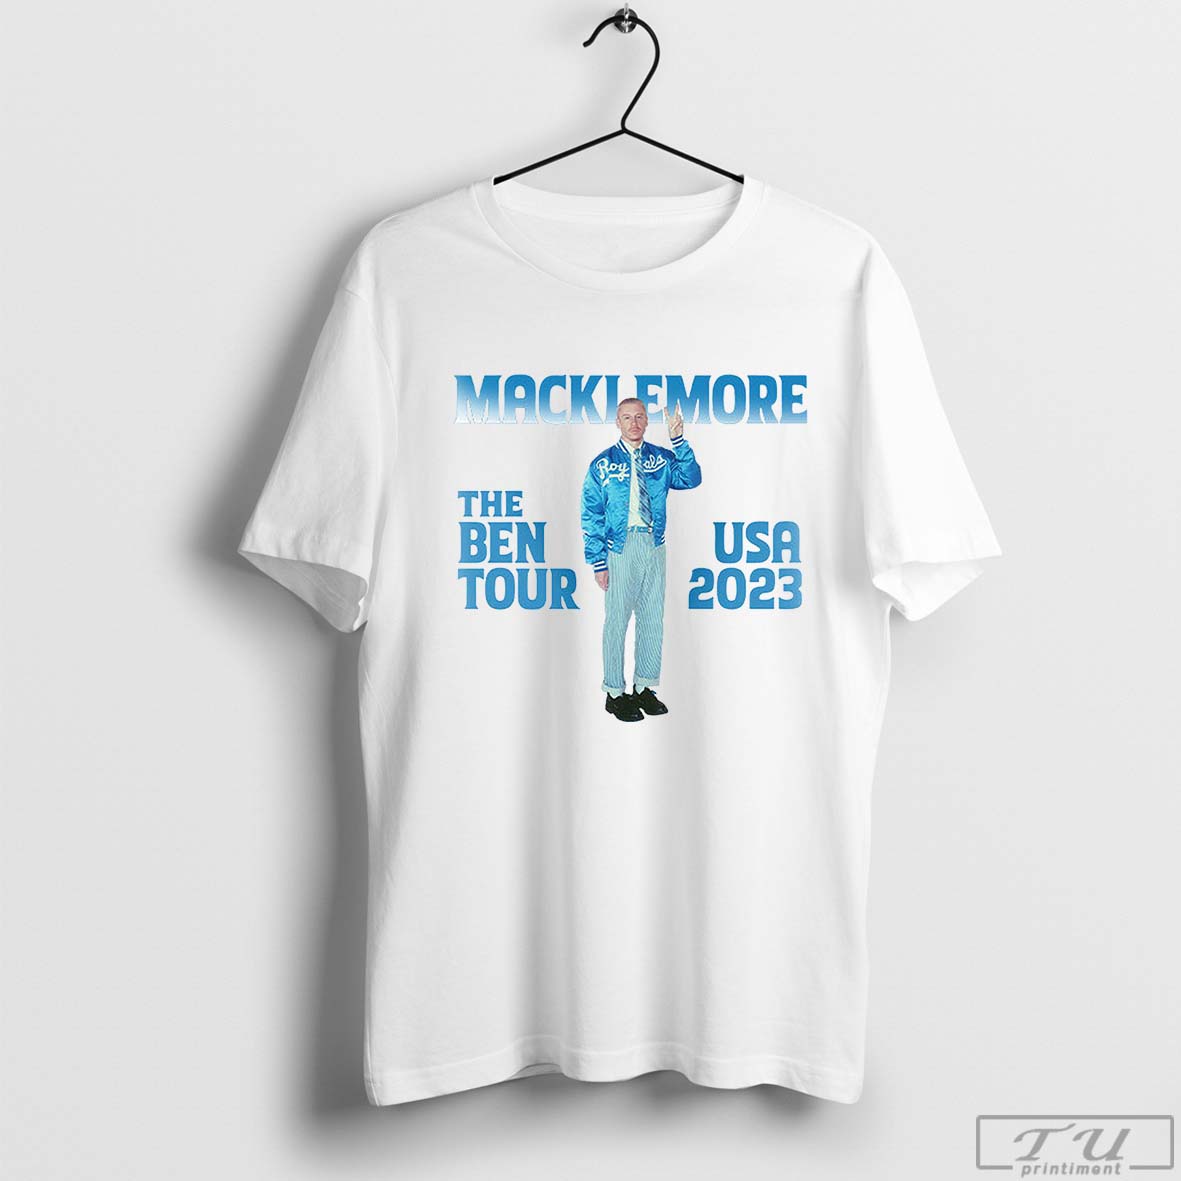 Macklemore The Ben Tour 2023 T-Shirt, Macklemore Tour Shirt for Fan, The Ben 2023 Concert Gift